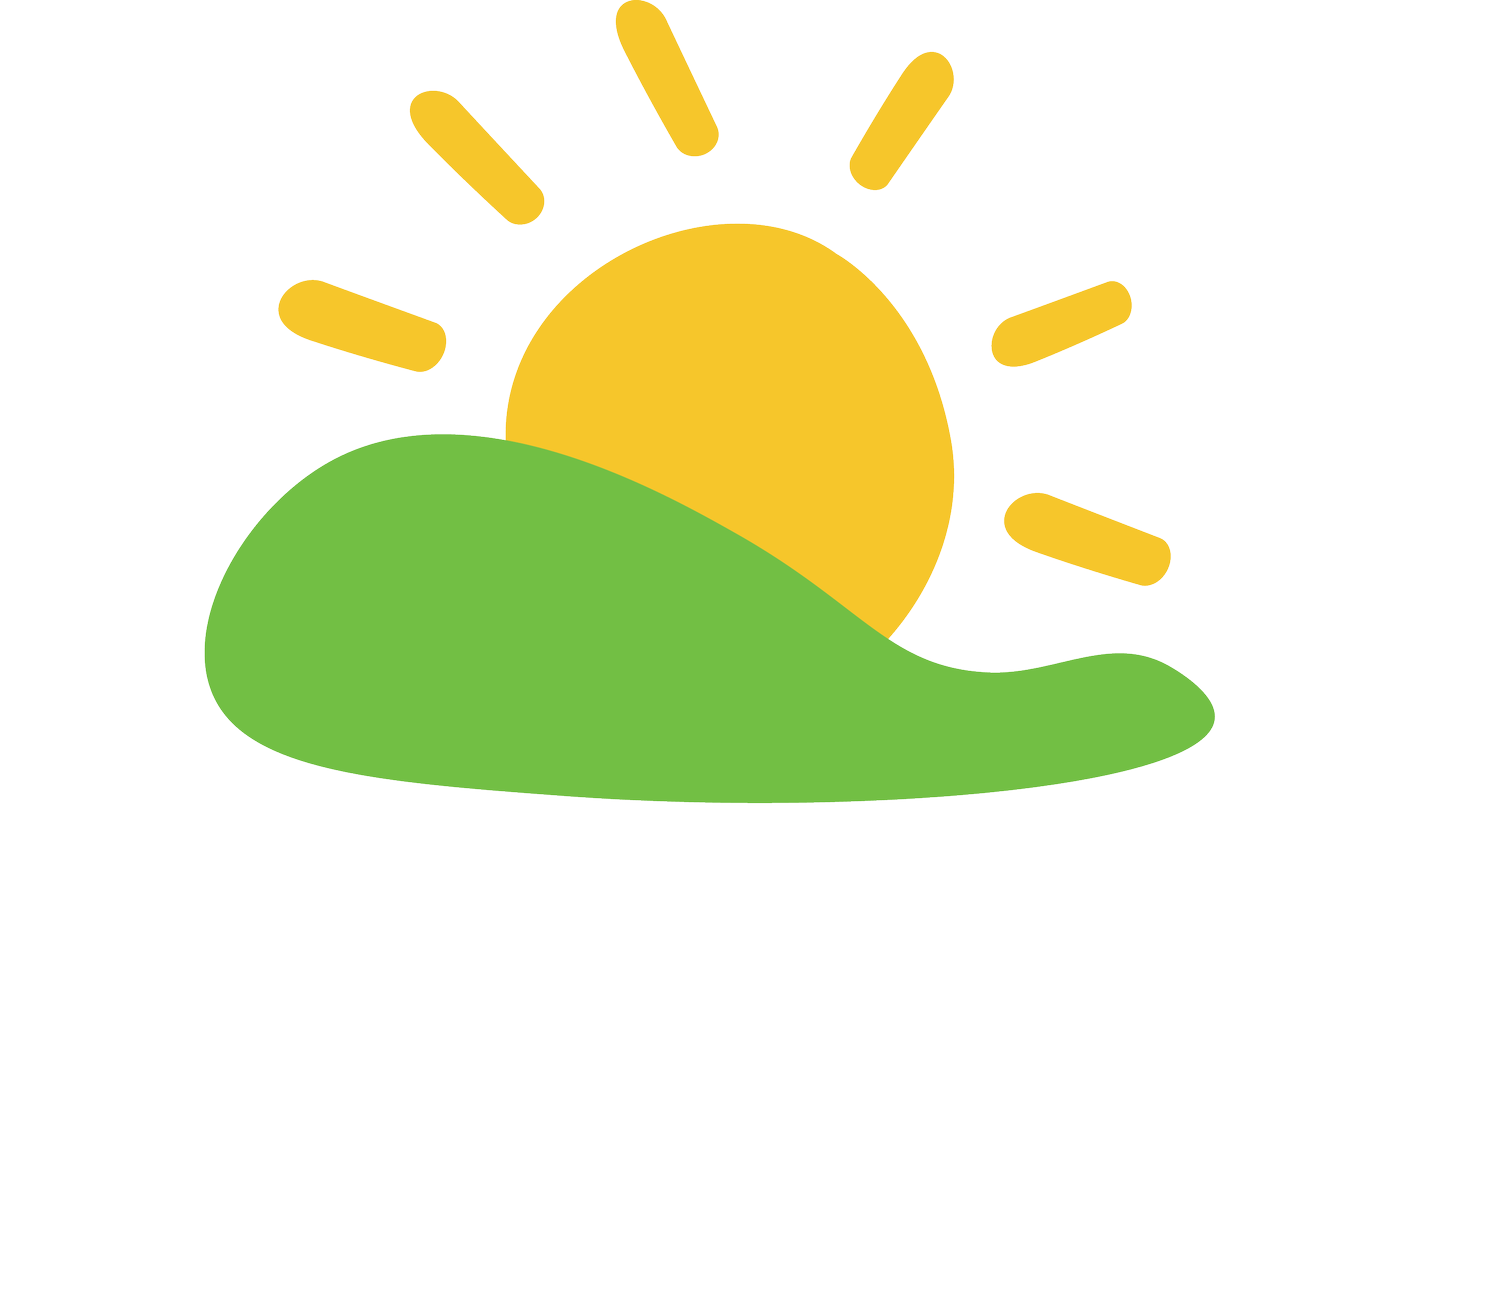 Help Your Neighbor